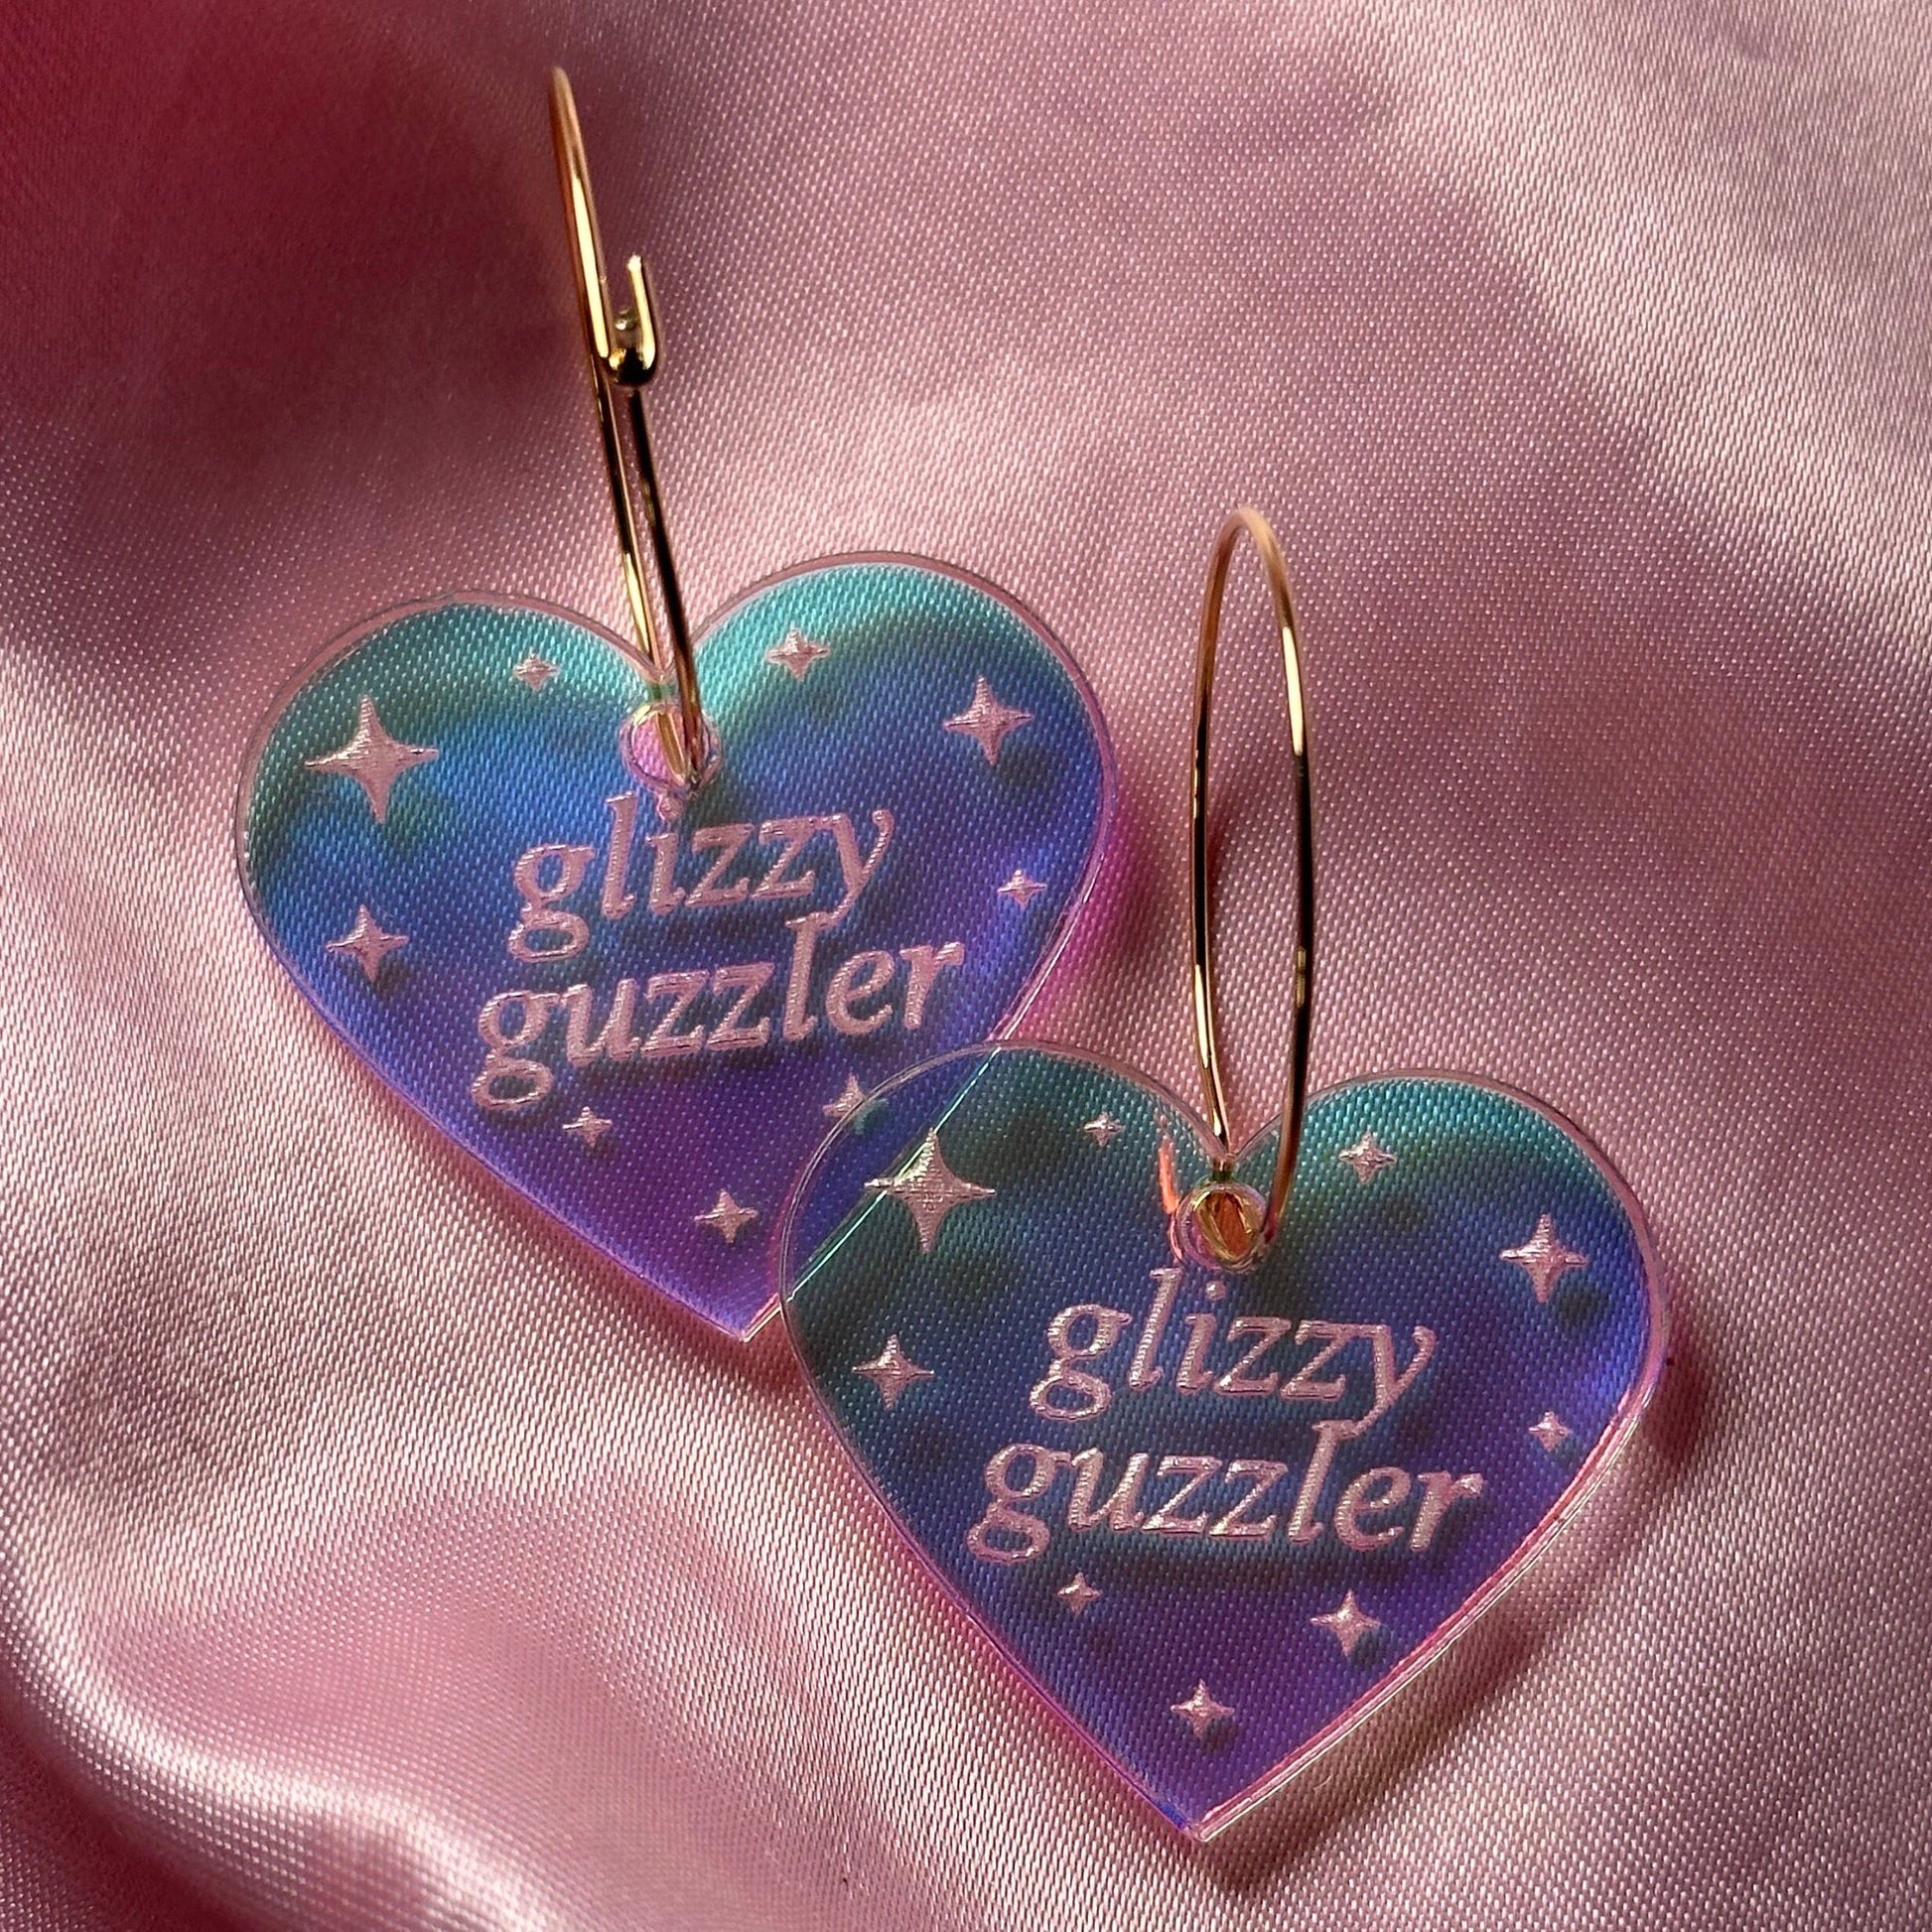 Iridescent Glizzy Guzzler Heart Hoop Earrings